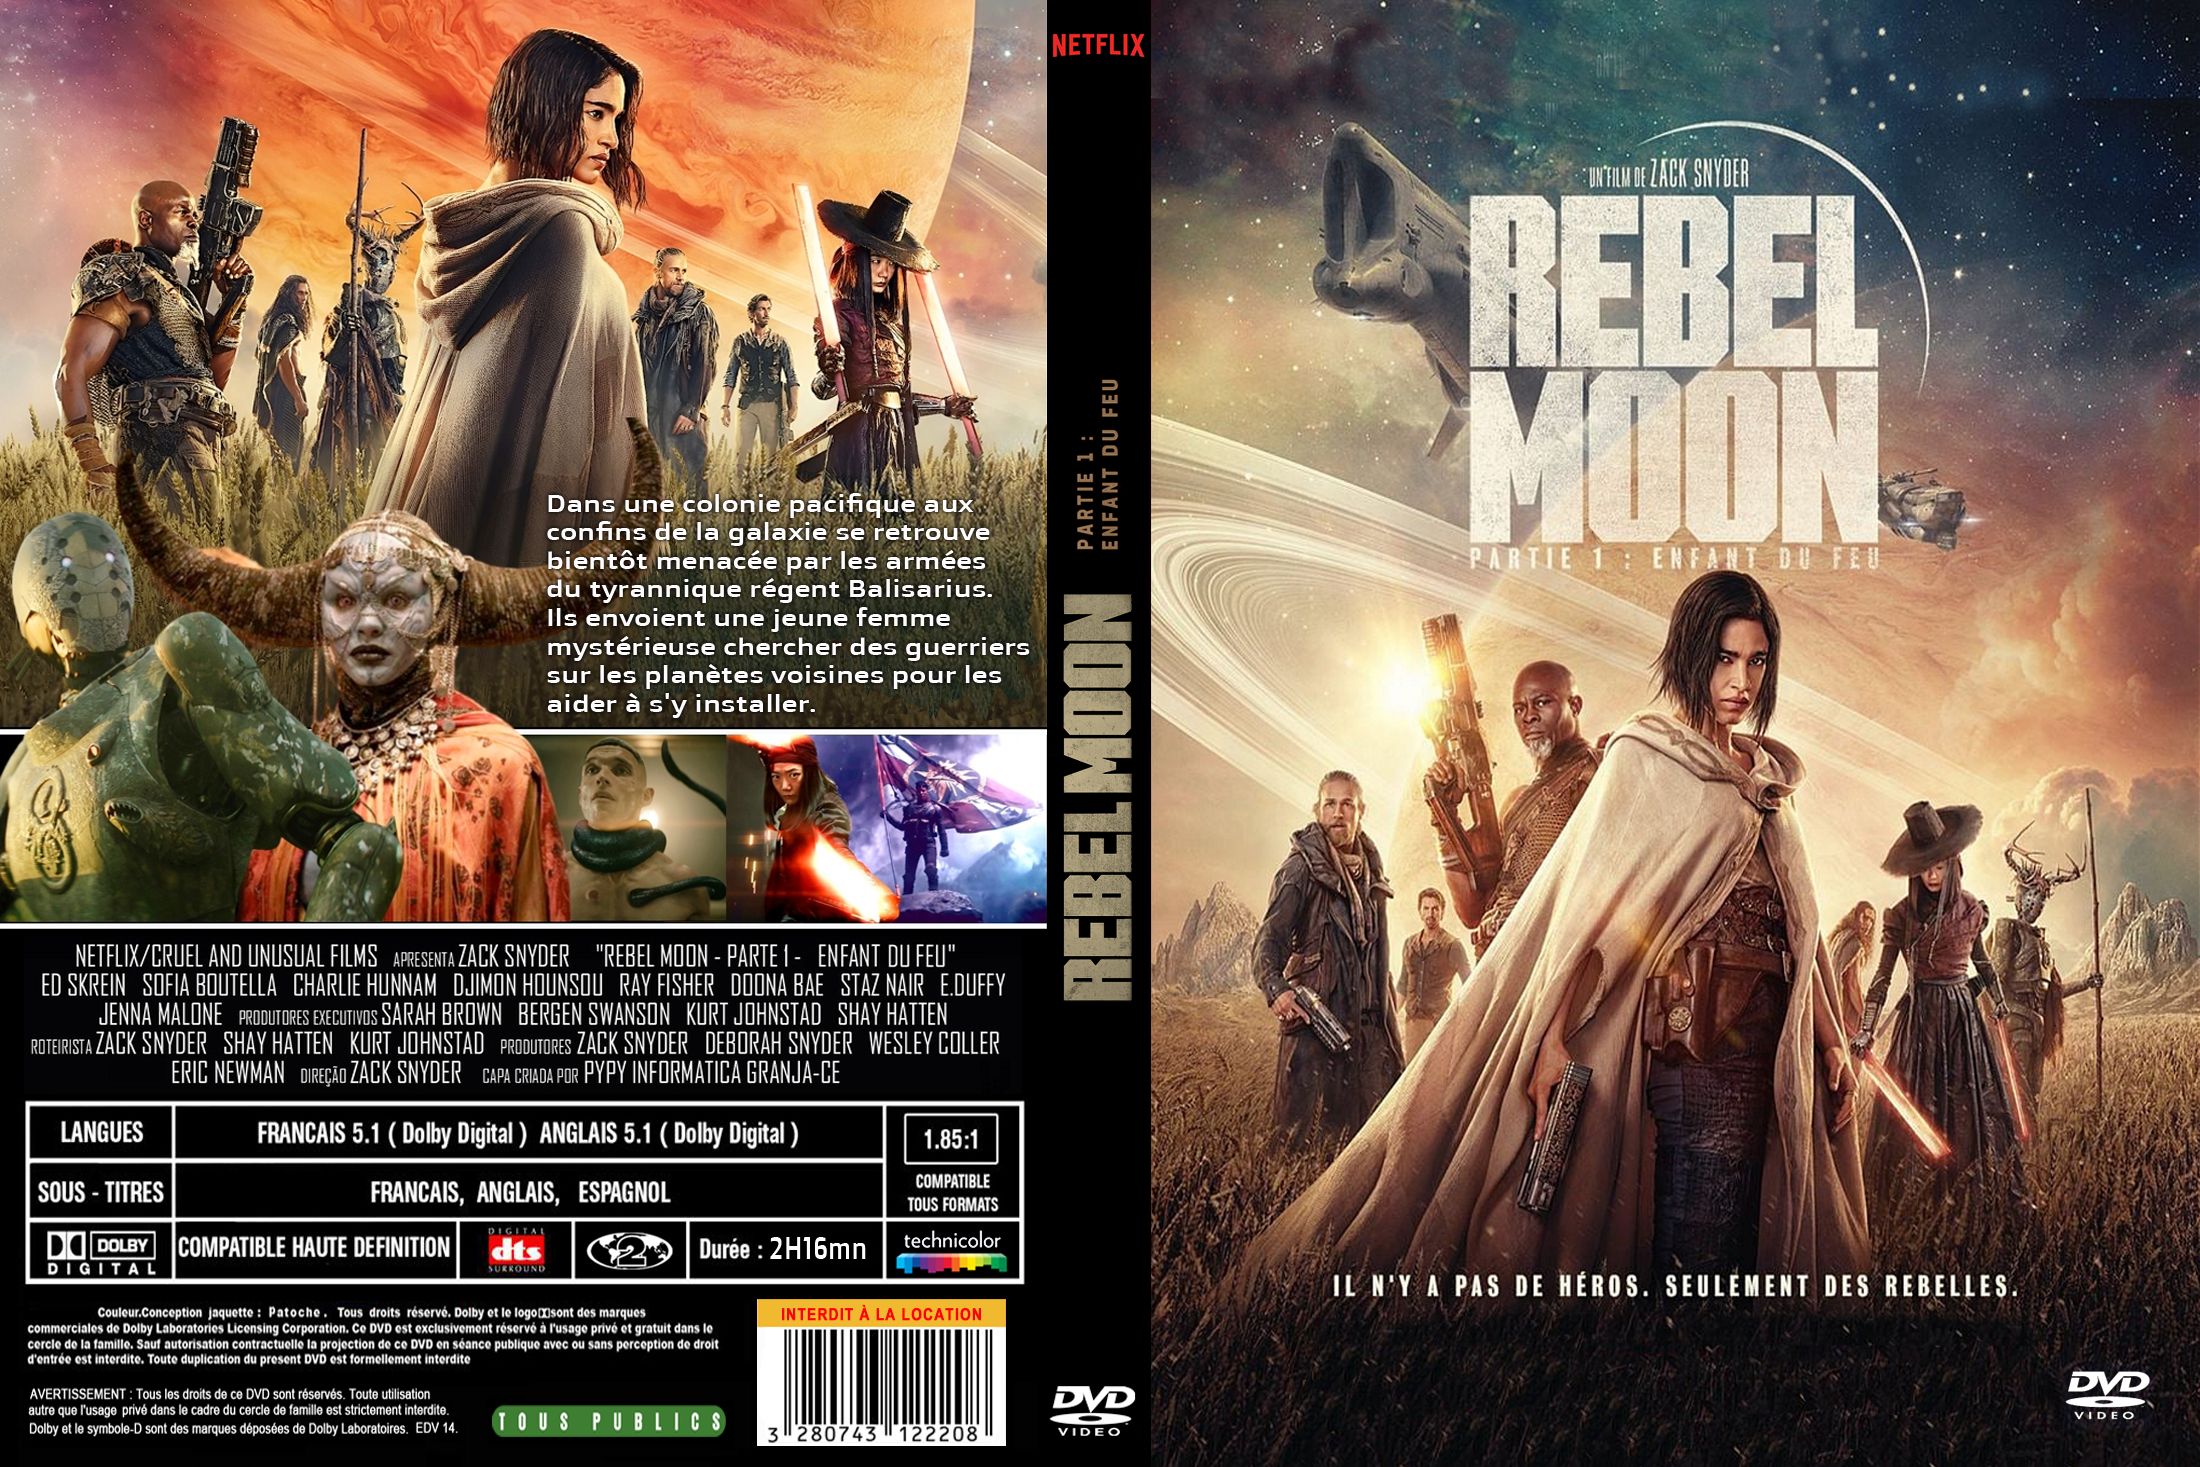 Jaquette DVD Rebel Moon partie 1 Enfant du Feu custom